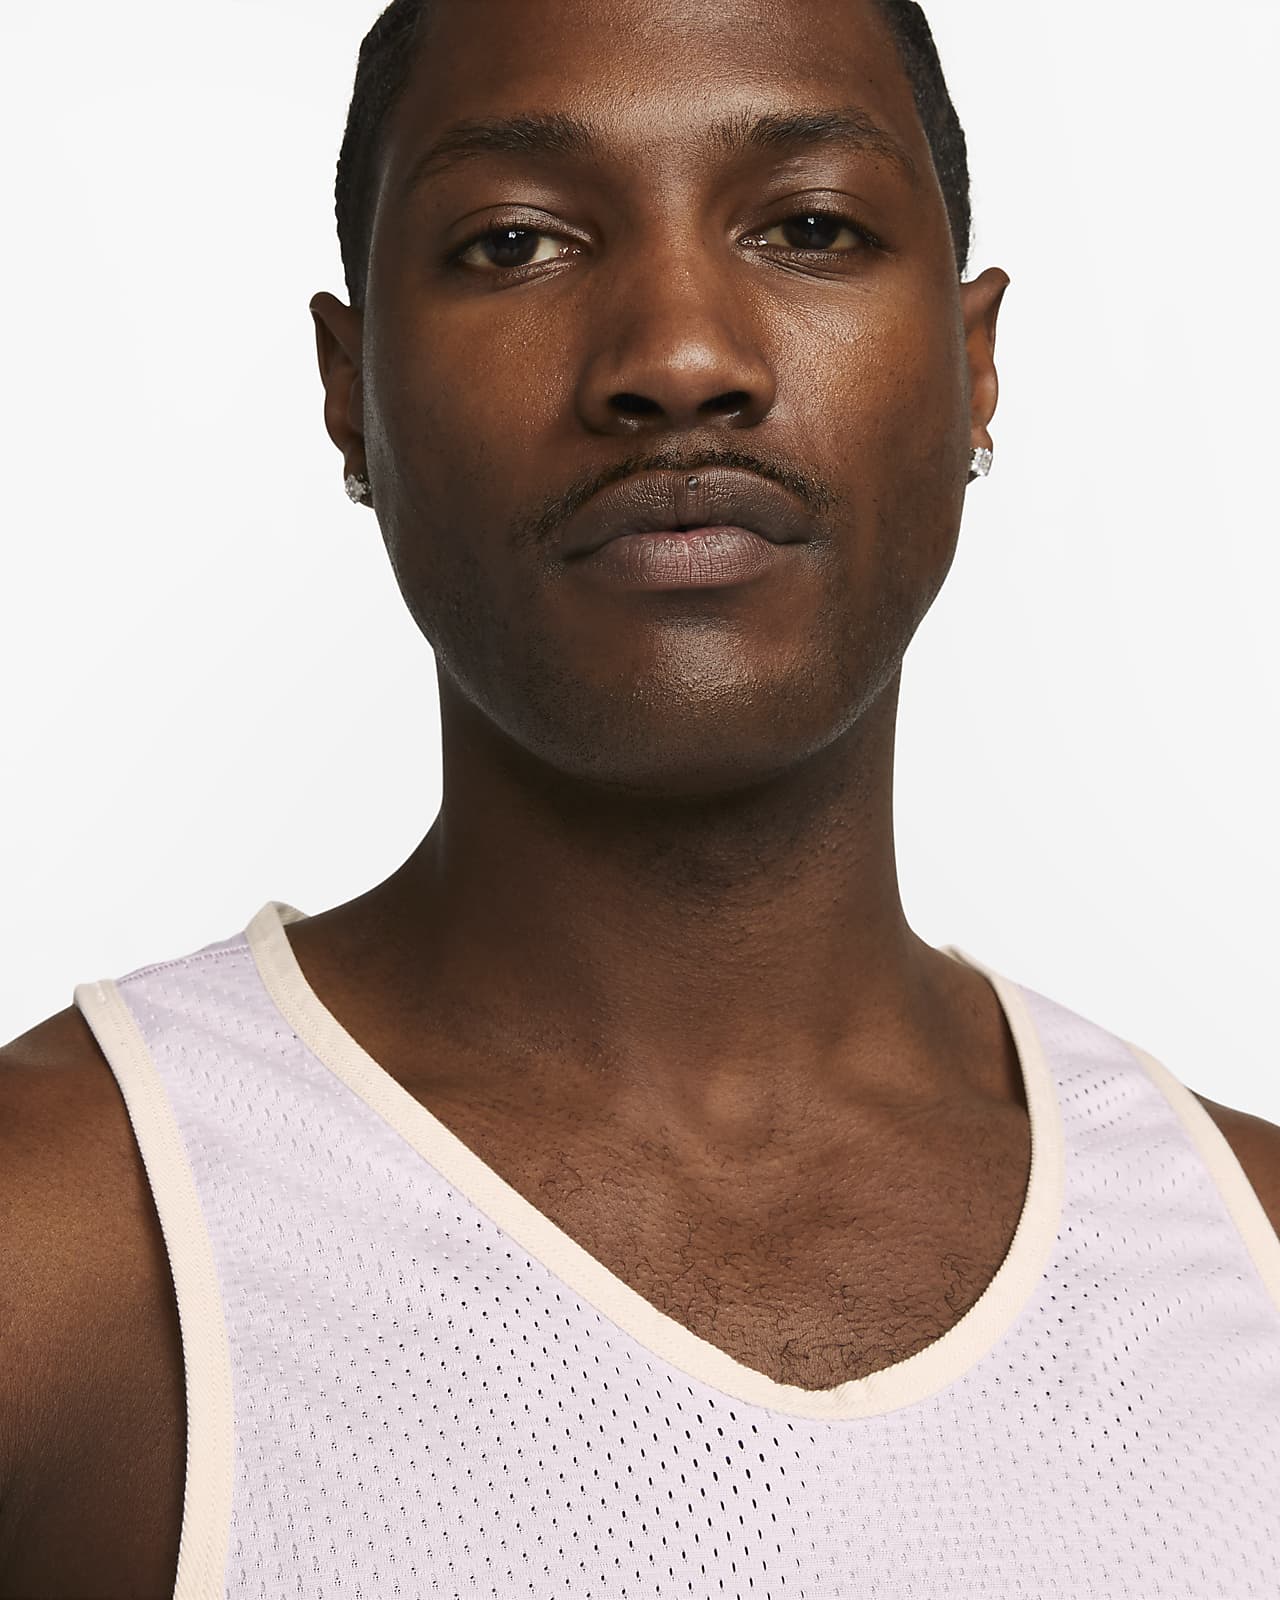 Kevin Durant Men's Nike Dri-FIT Mesh Basketball Jersey.